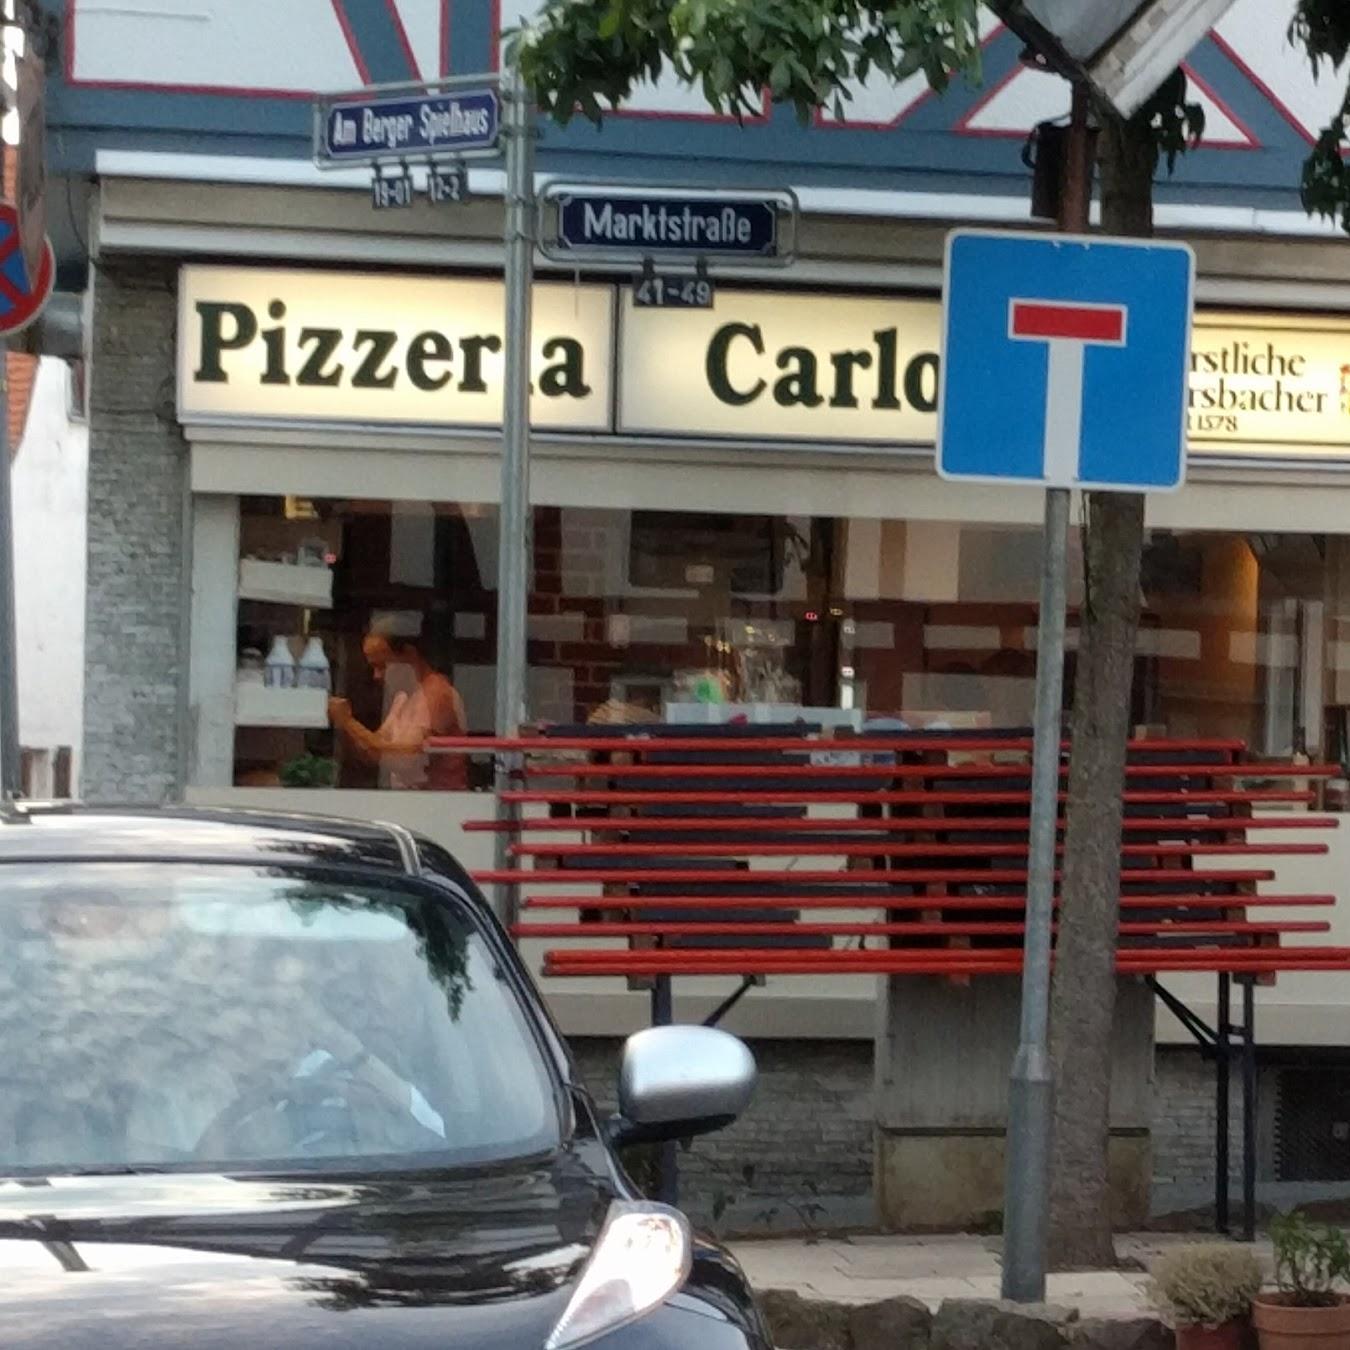 Restaurant "Pizzeria Carlo" in Frankfurt am Main